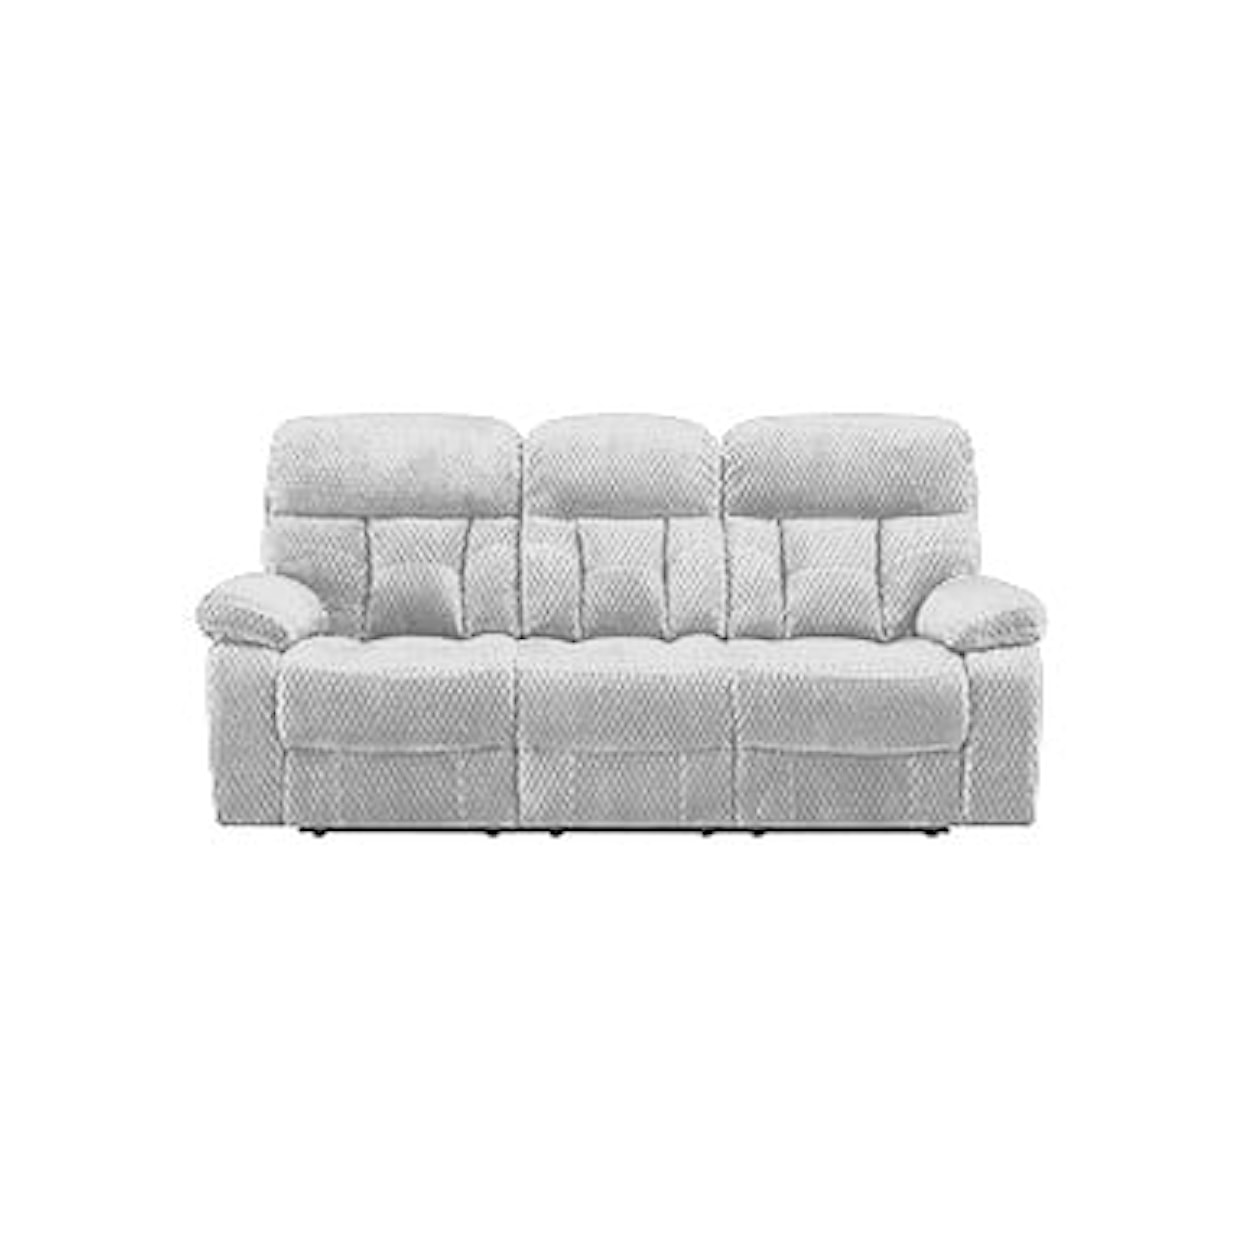 New Classic Bravo Reclining Sofa